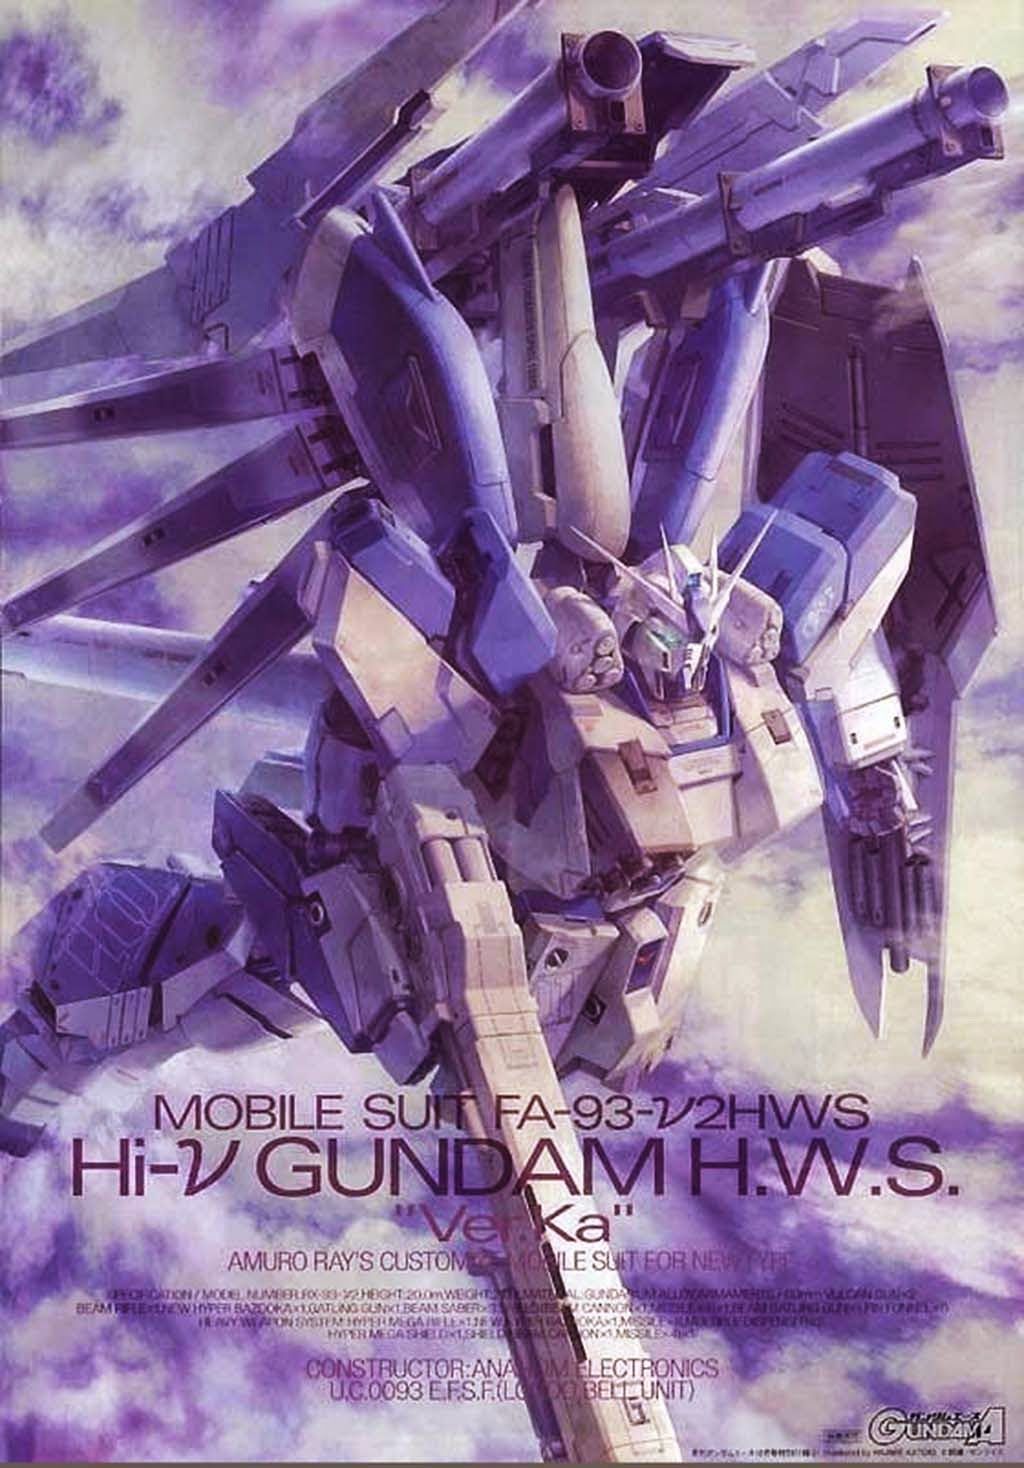 Wallpaper: FA 93 ν2 HWS Hi Nu Gundam HWS Heavy Weapon System